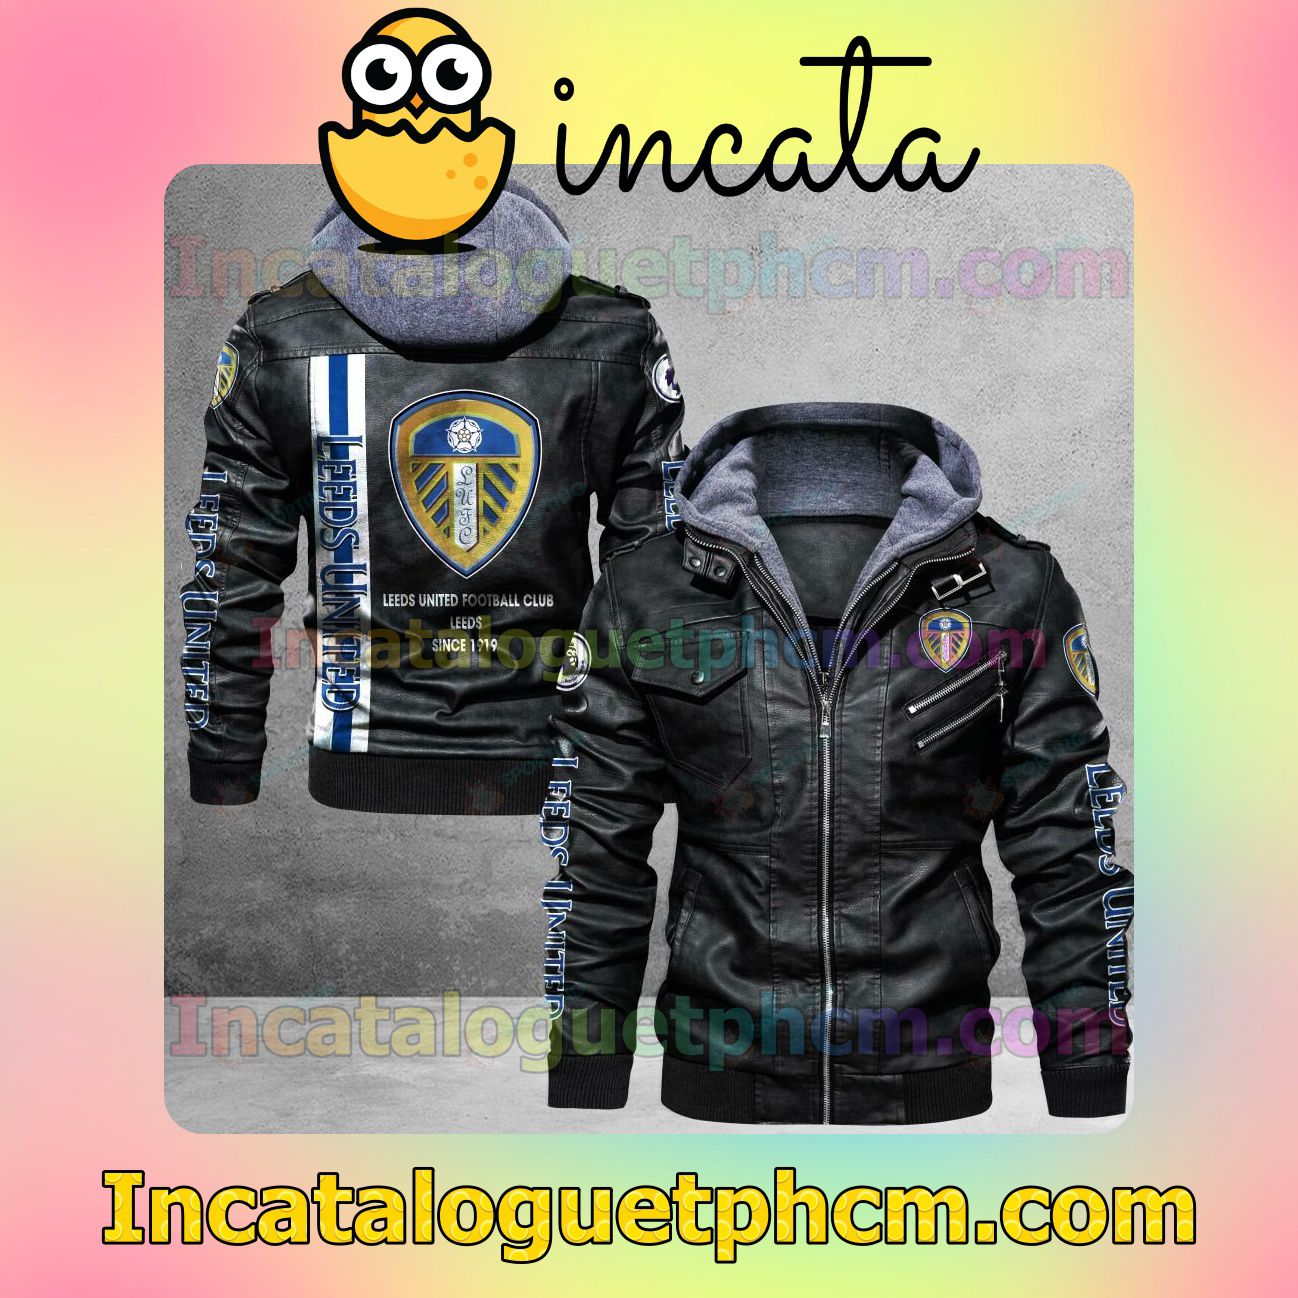 Leeds United F.C Brand Uniform Leather Jacket